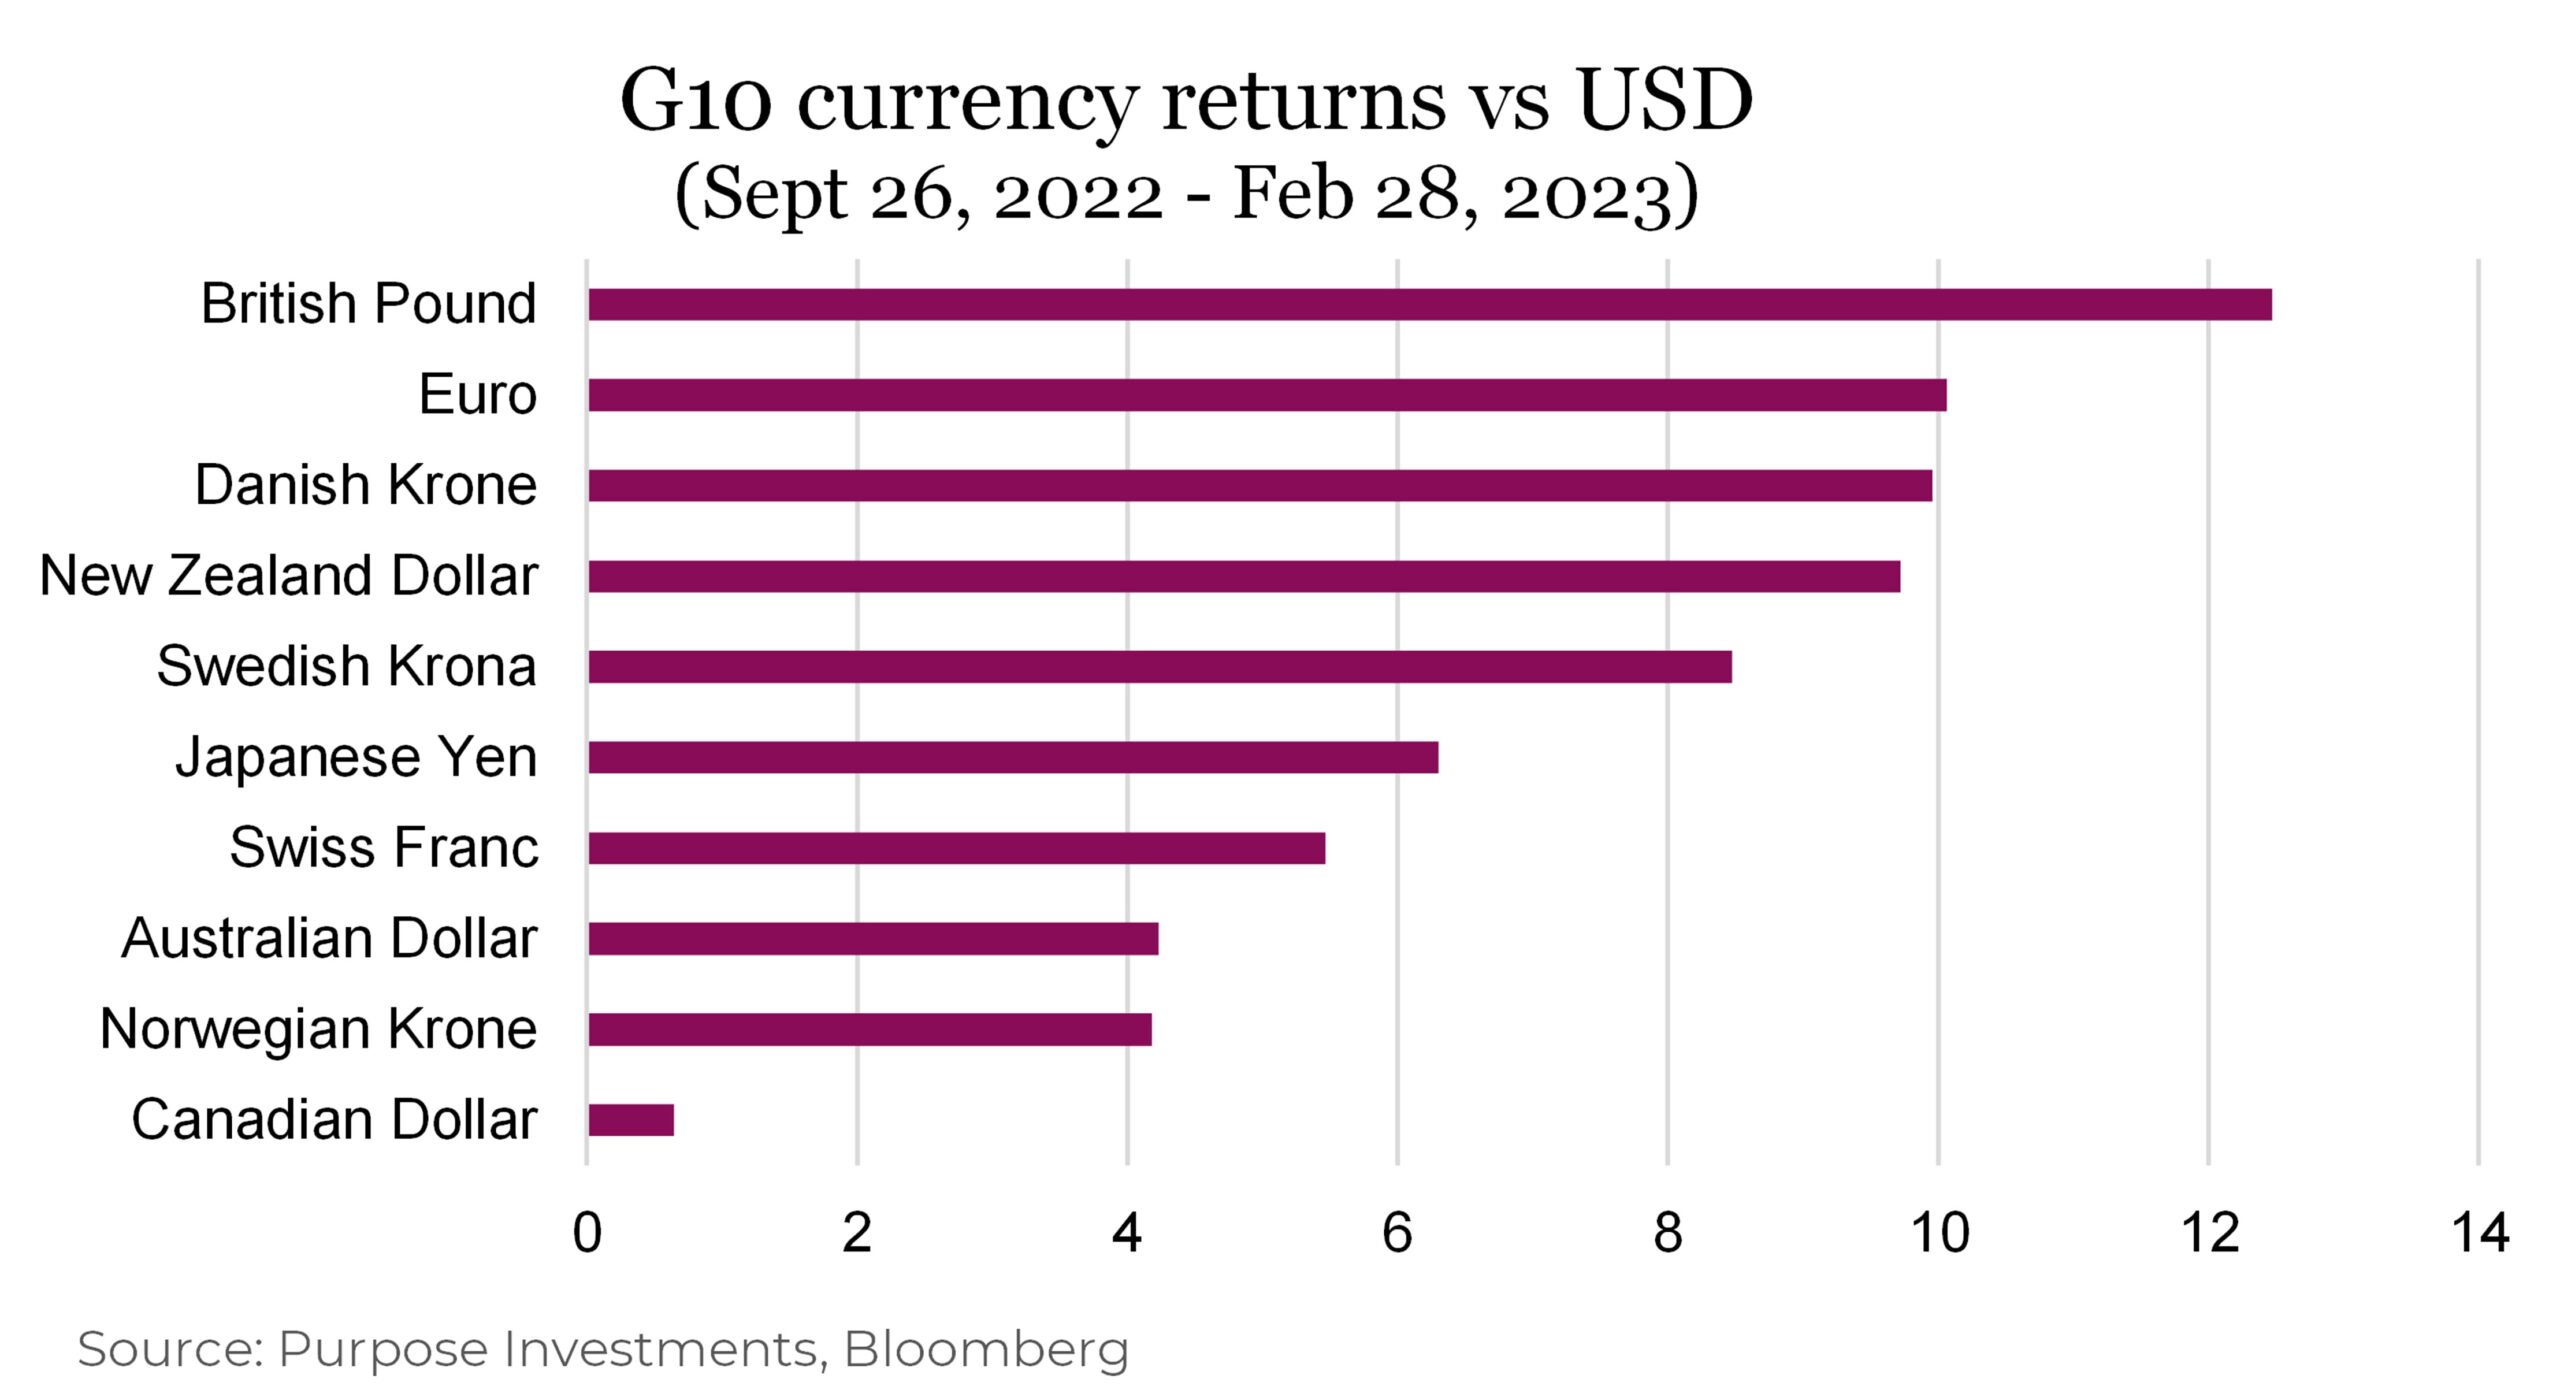 G10 currency returns vs USD
(Sept 26, 2022 - Feb 28, 2023)